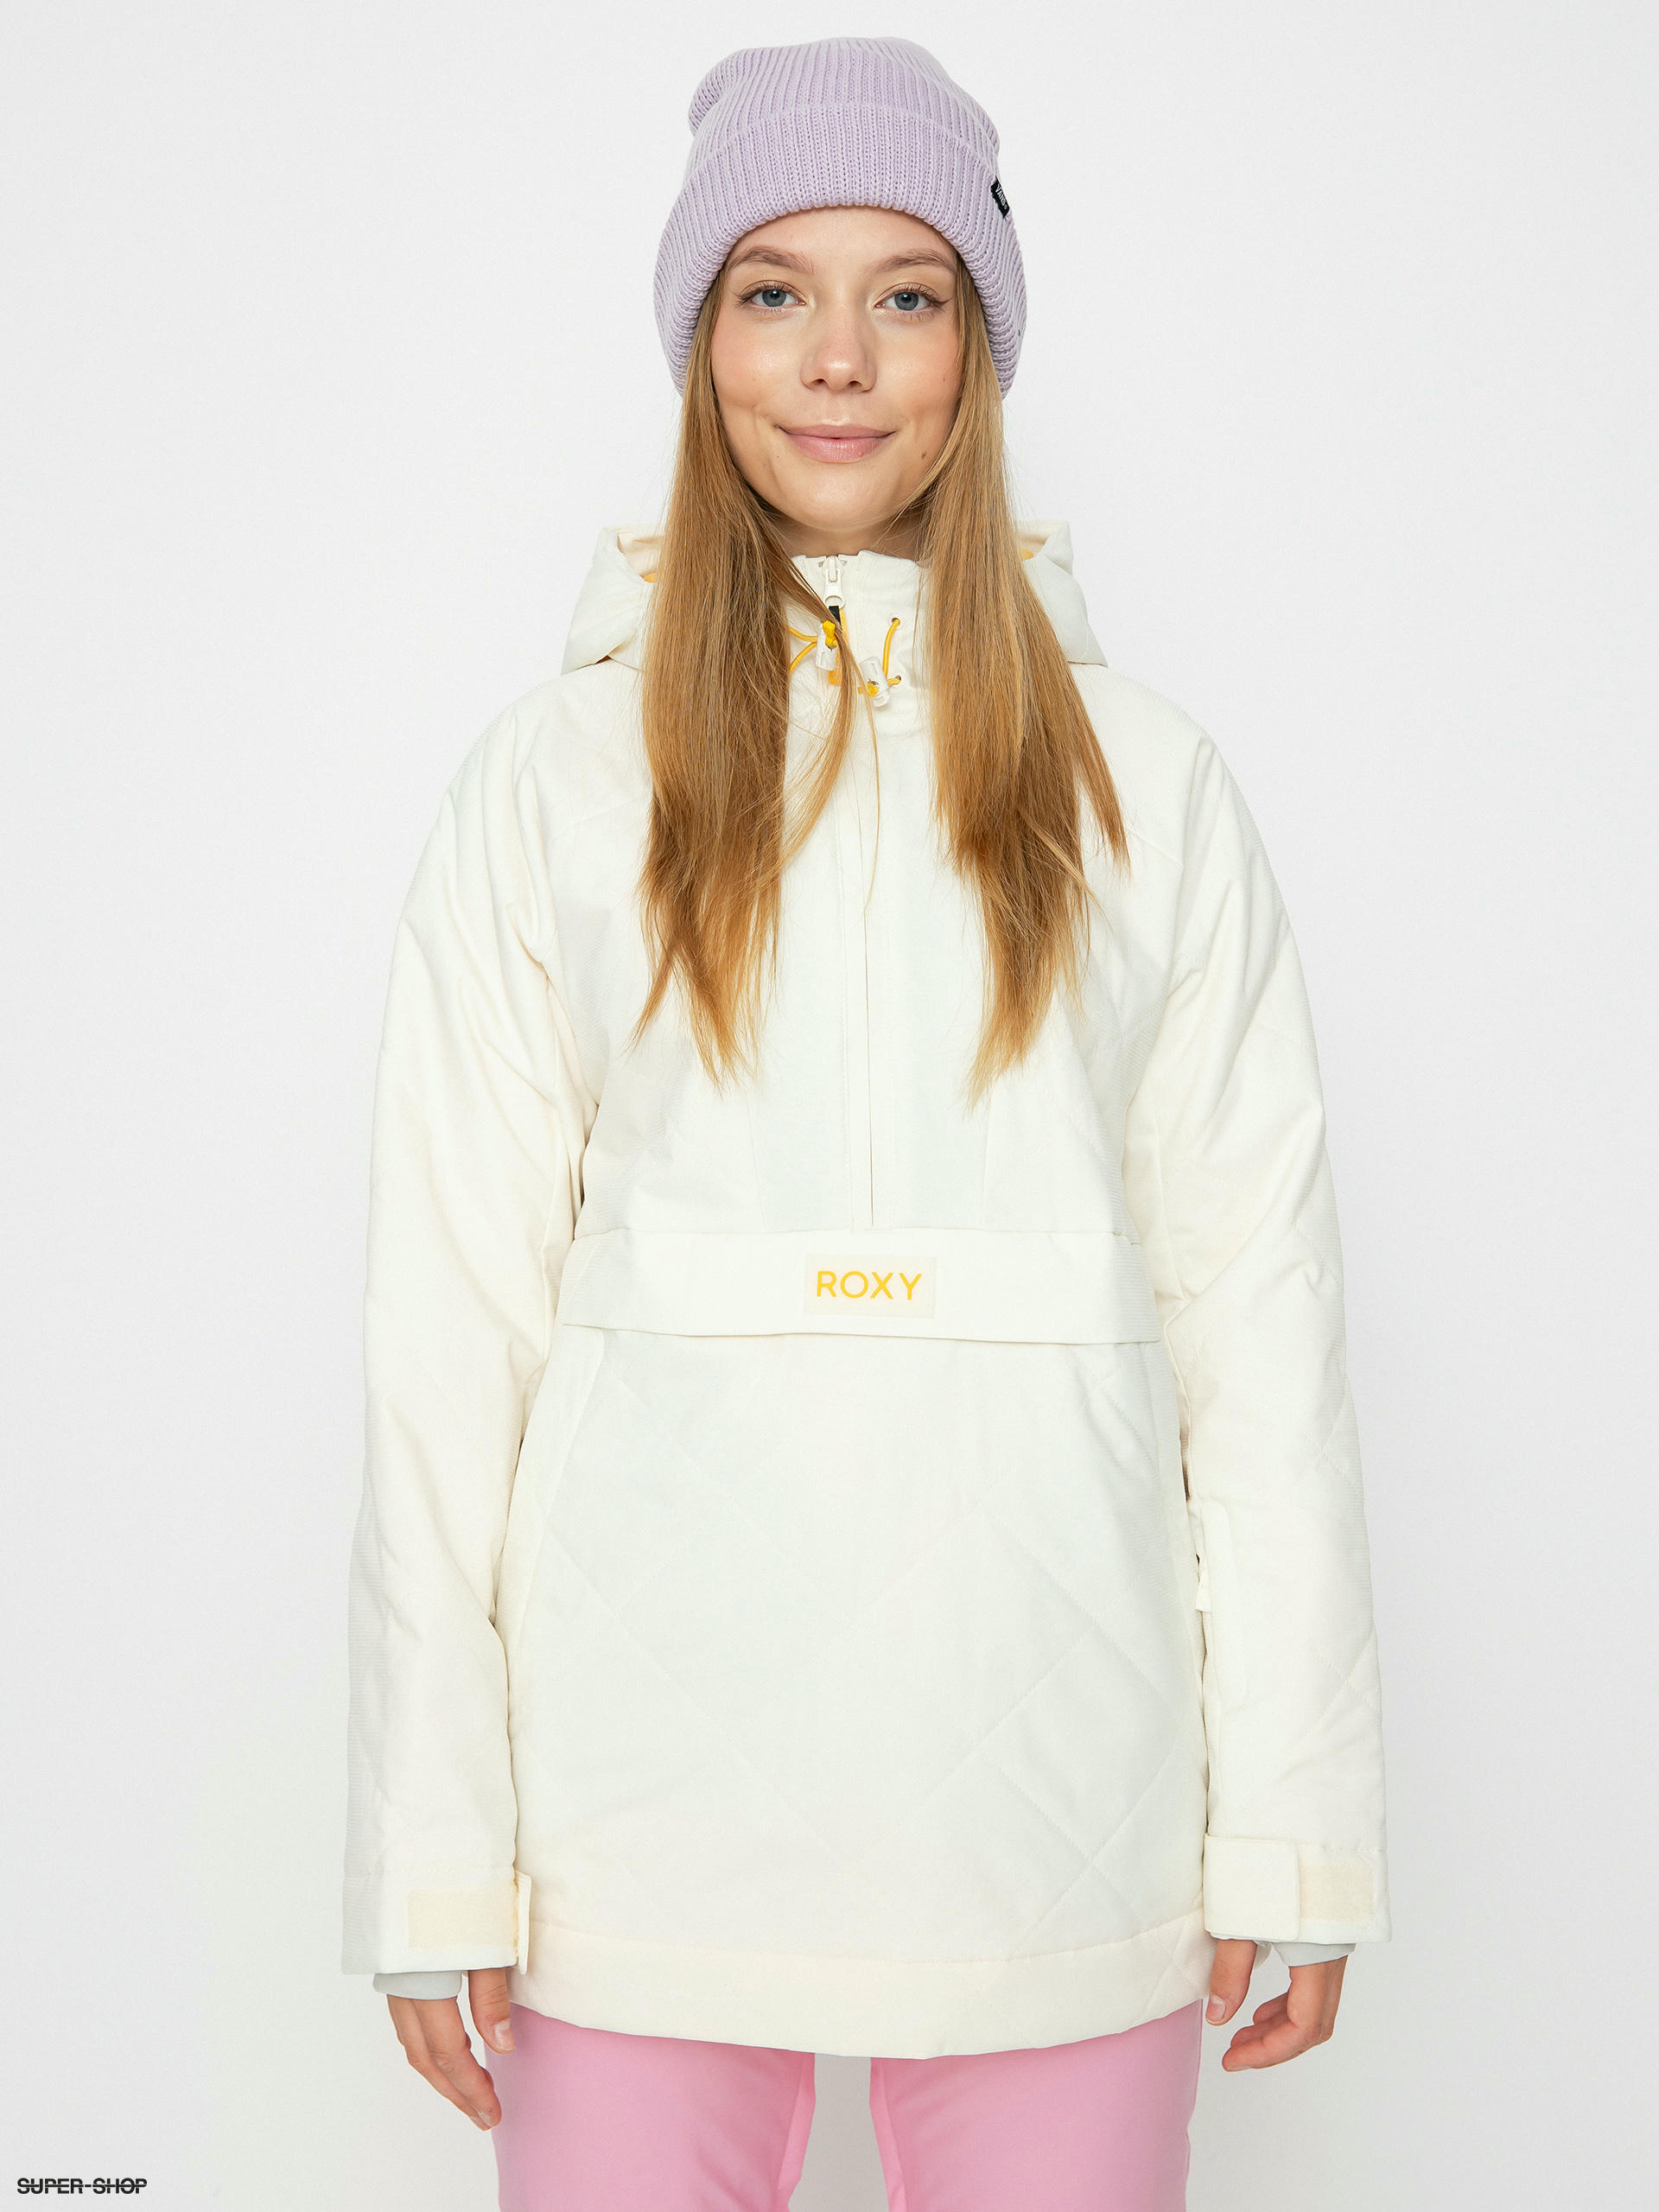 Roxy Women's Radiant Lines Overhead DryFlight Jacket